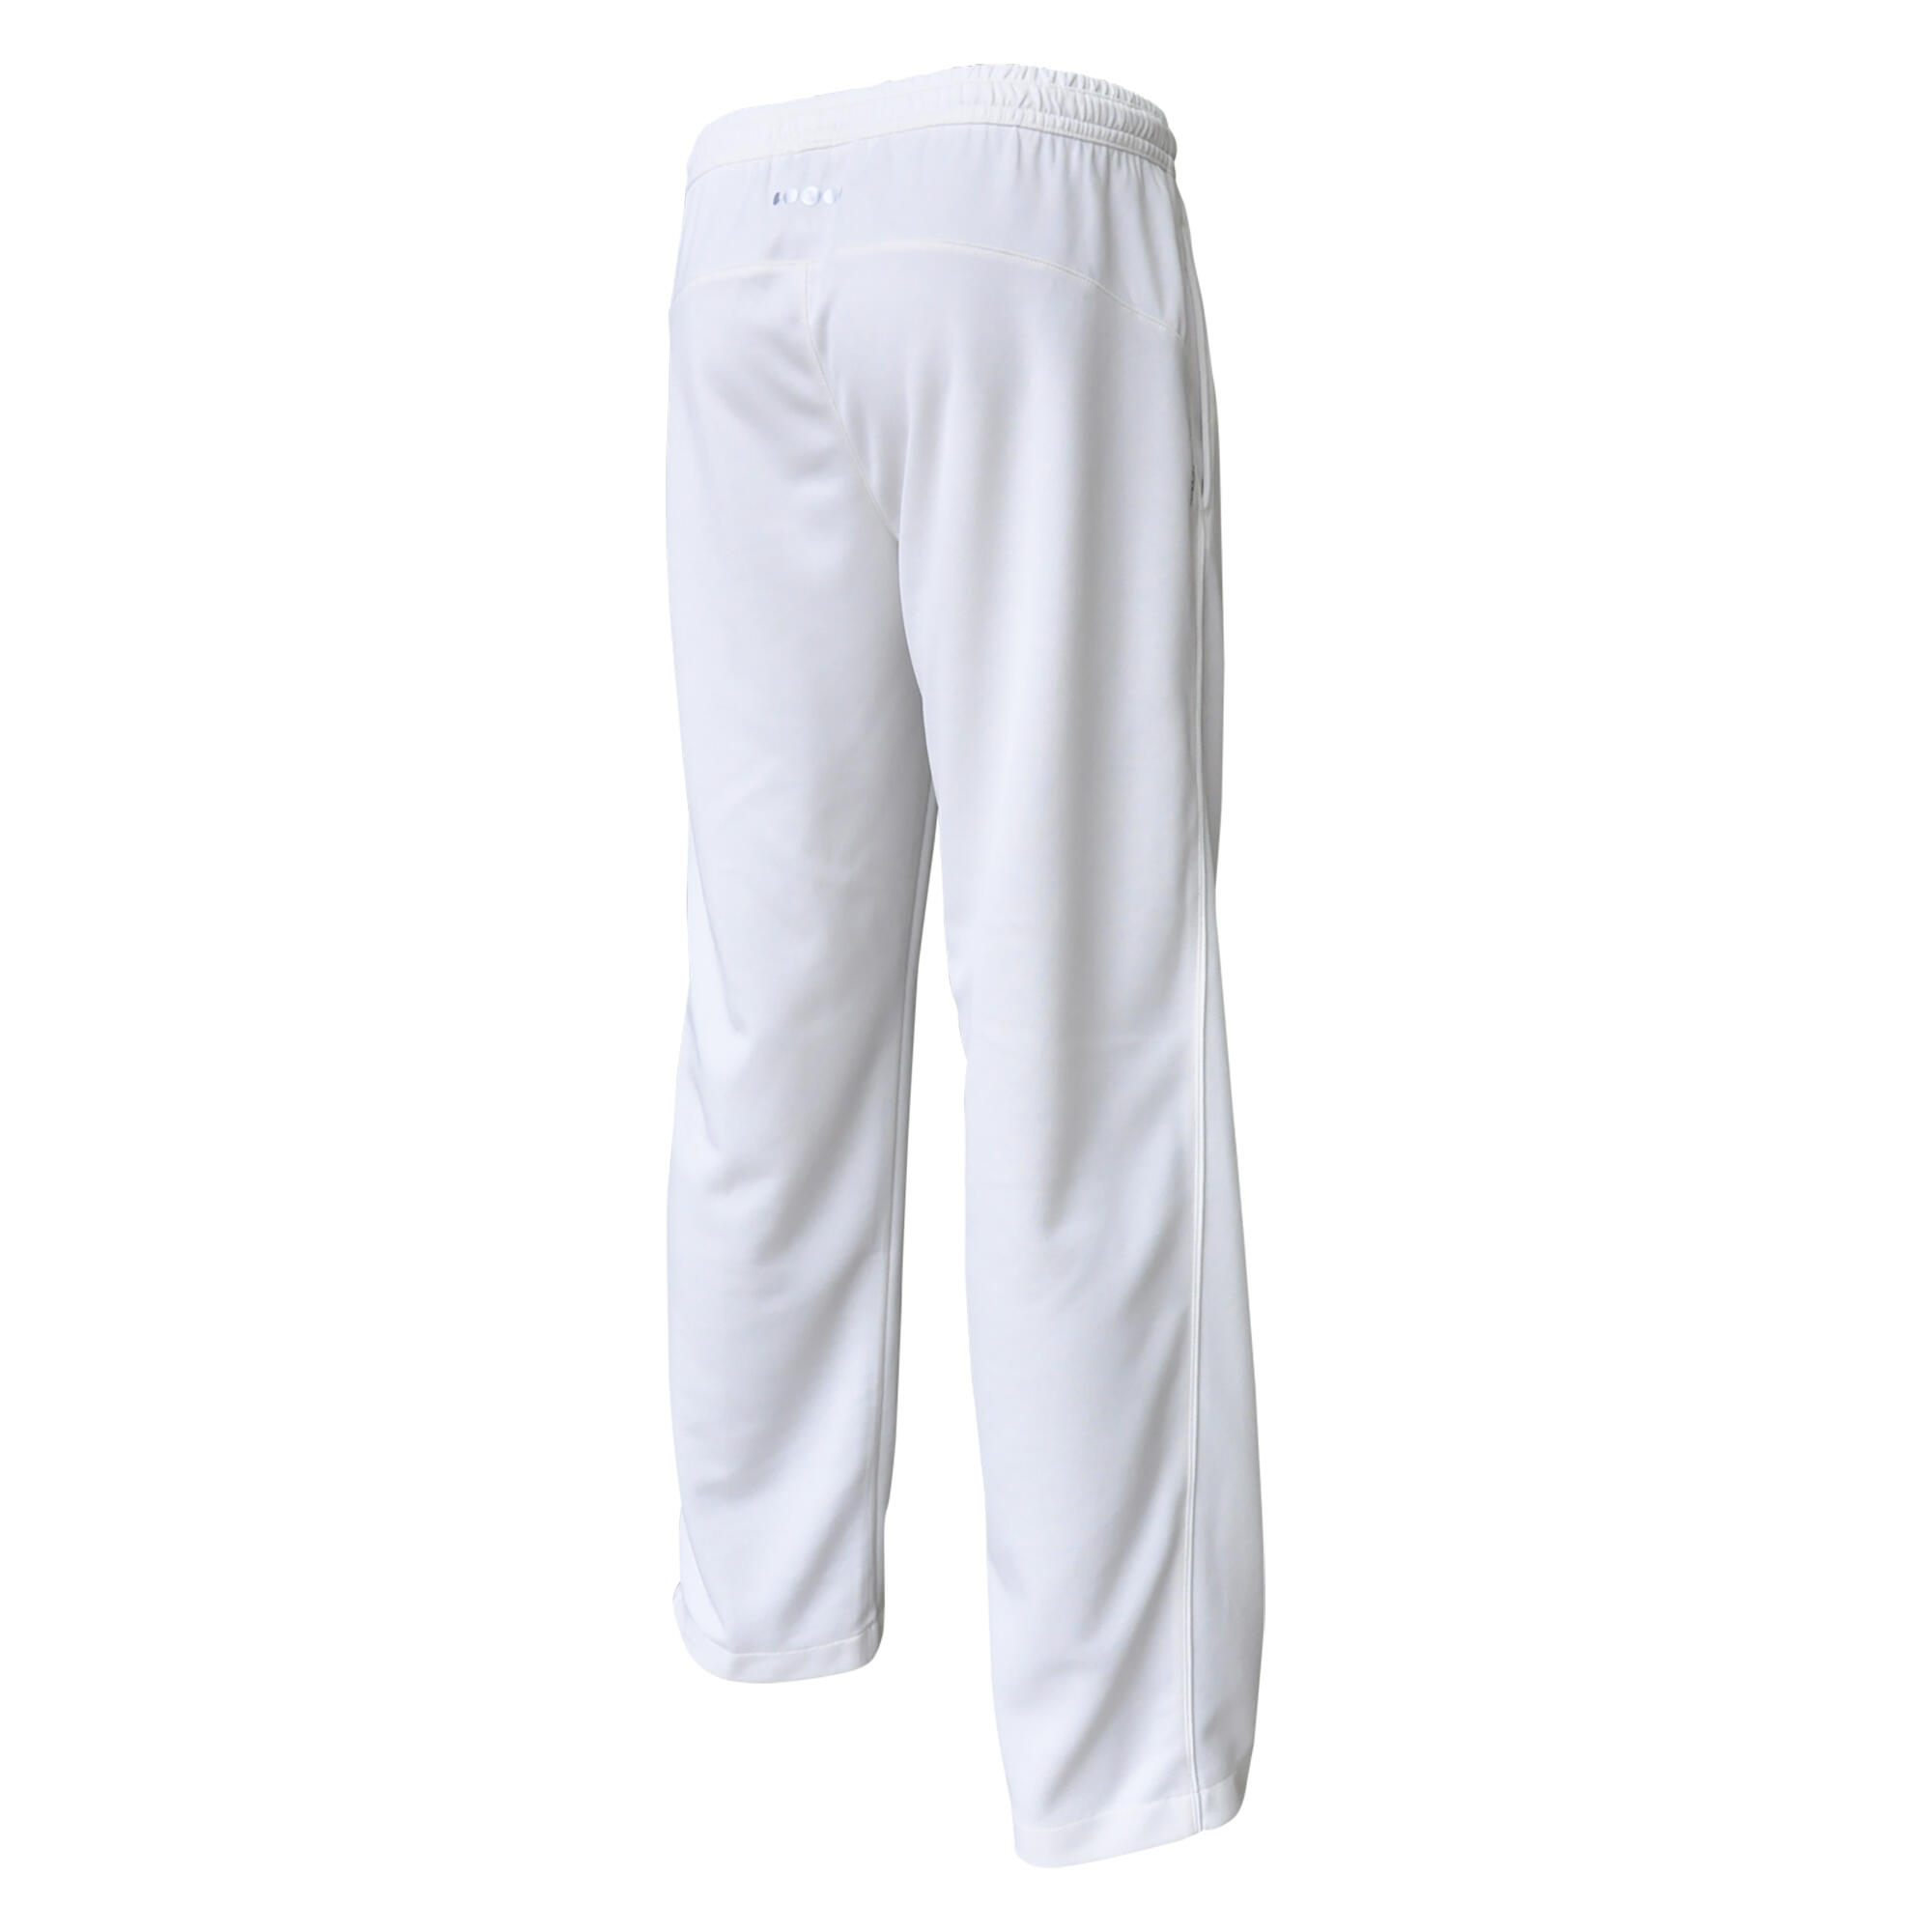 Kookaburra Pro Player Junior Cricket Pants White 2/2